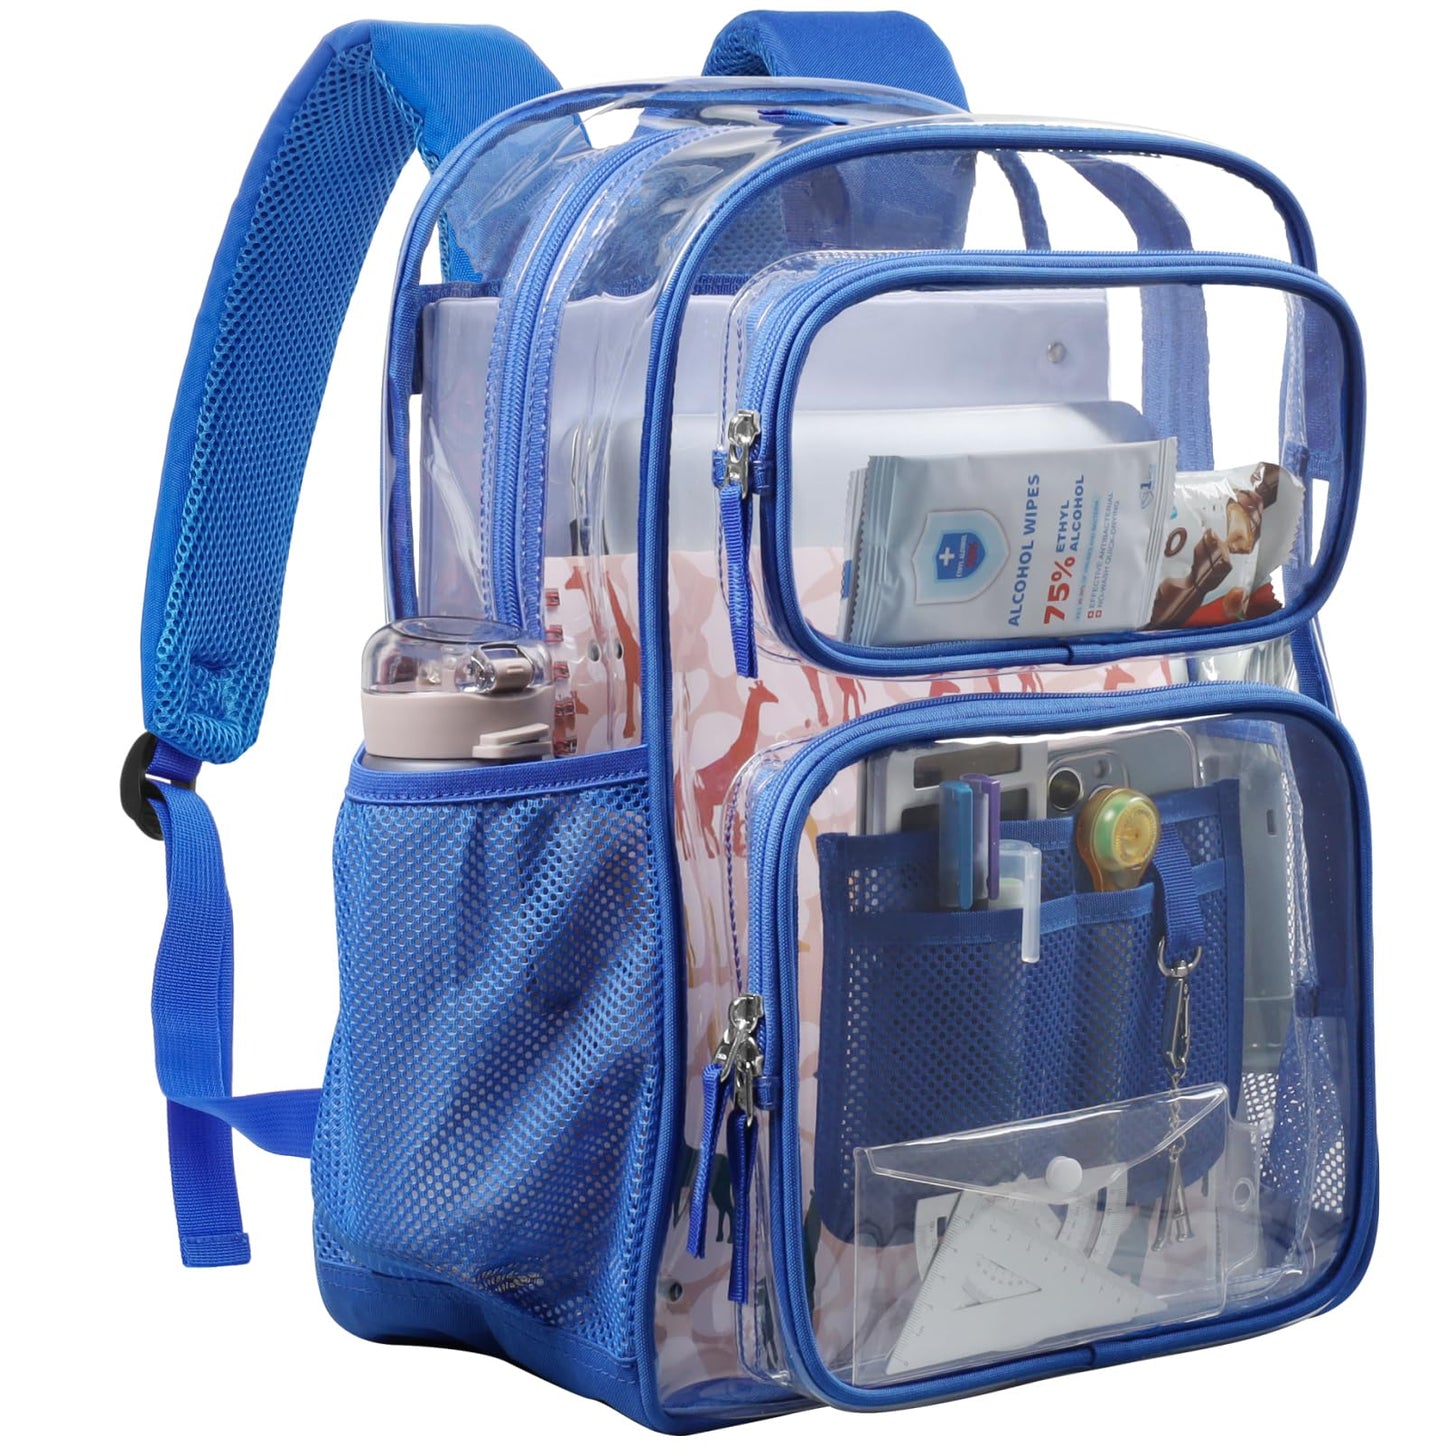 xxl clear backpack